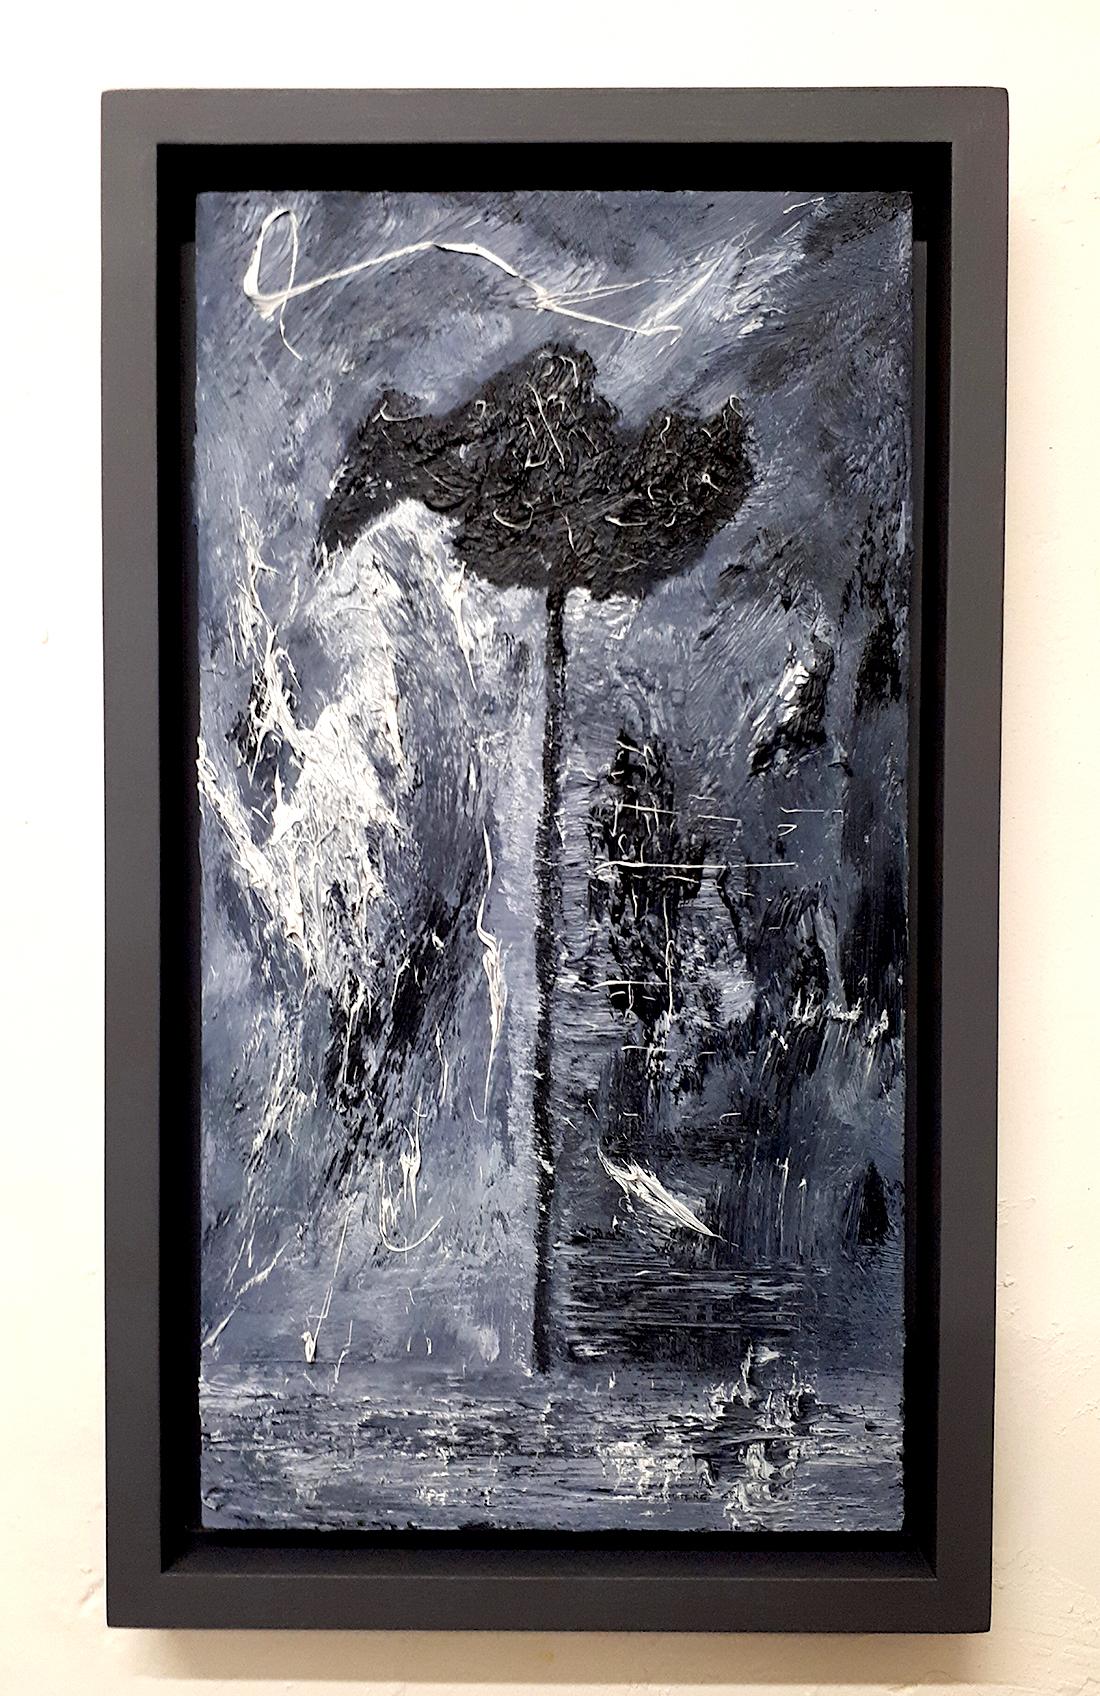 Oil on panel. Framed in contemporary black wood frame. Measures: Image 15